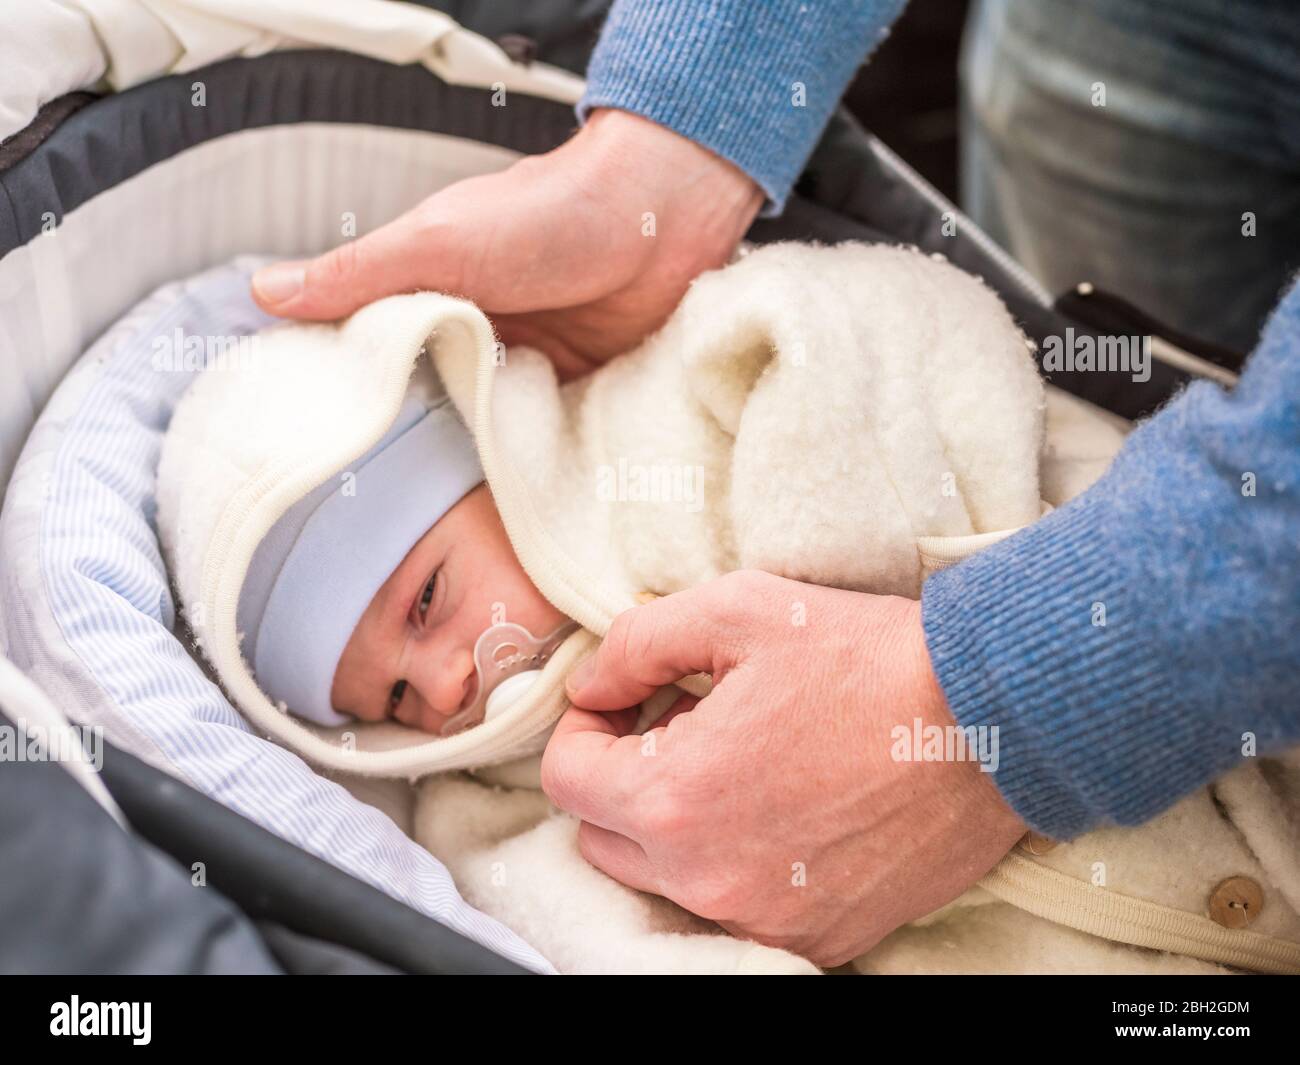 how to put a newborn baby in a pram